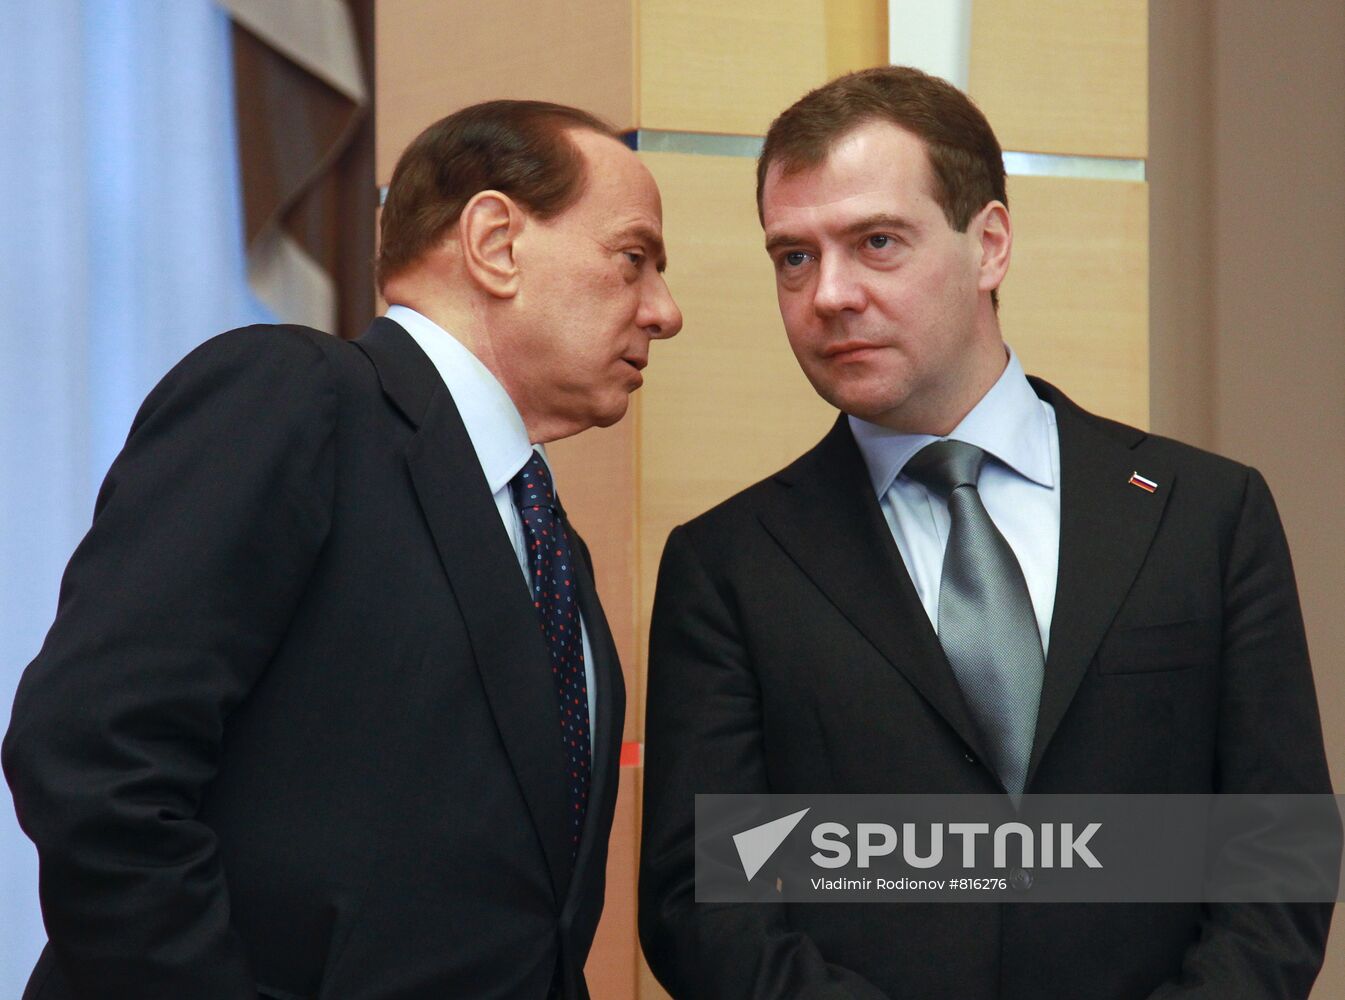 Dmitry Medvedev, Silvio Berlusconi